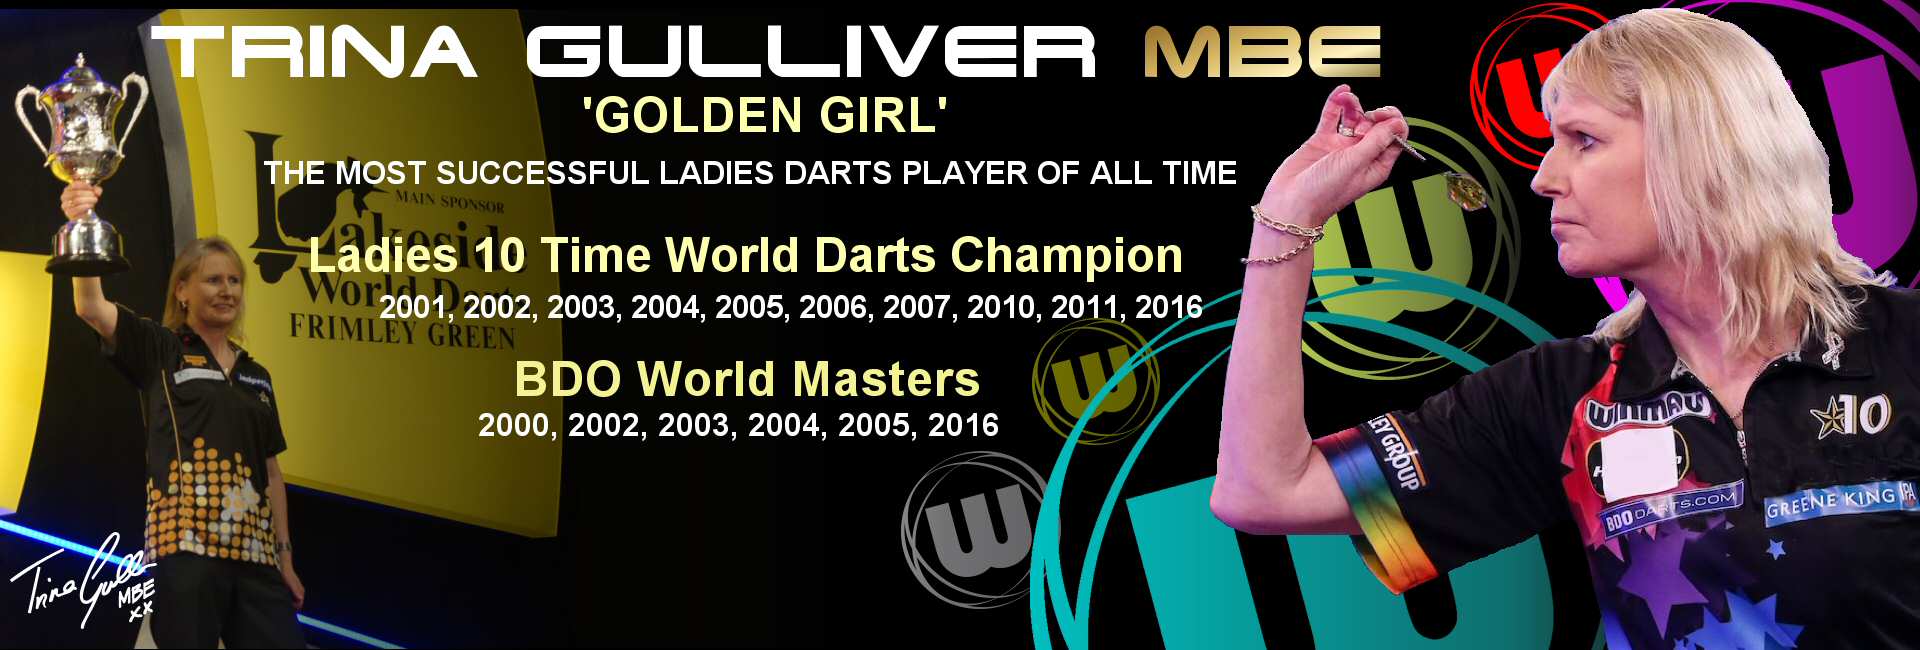 Trina Gulliver MBE 10 Time Ladies World Darts Champion